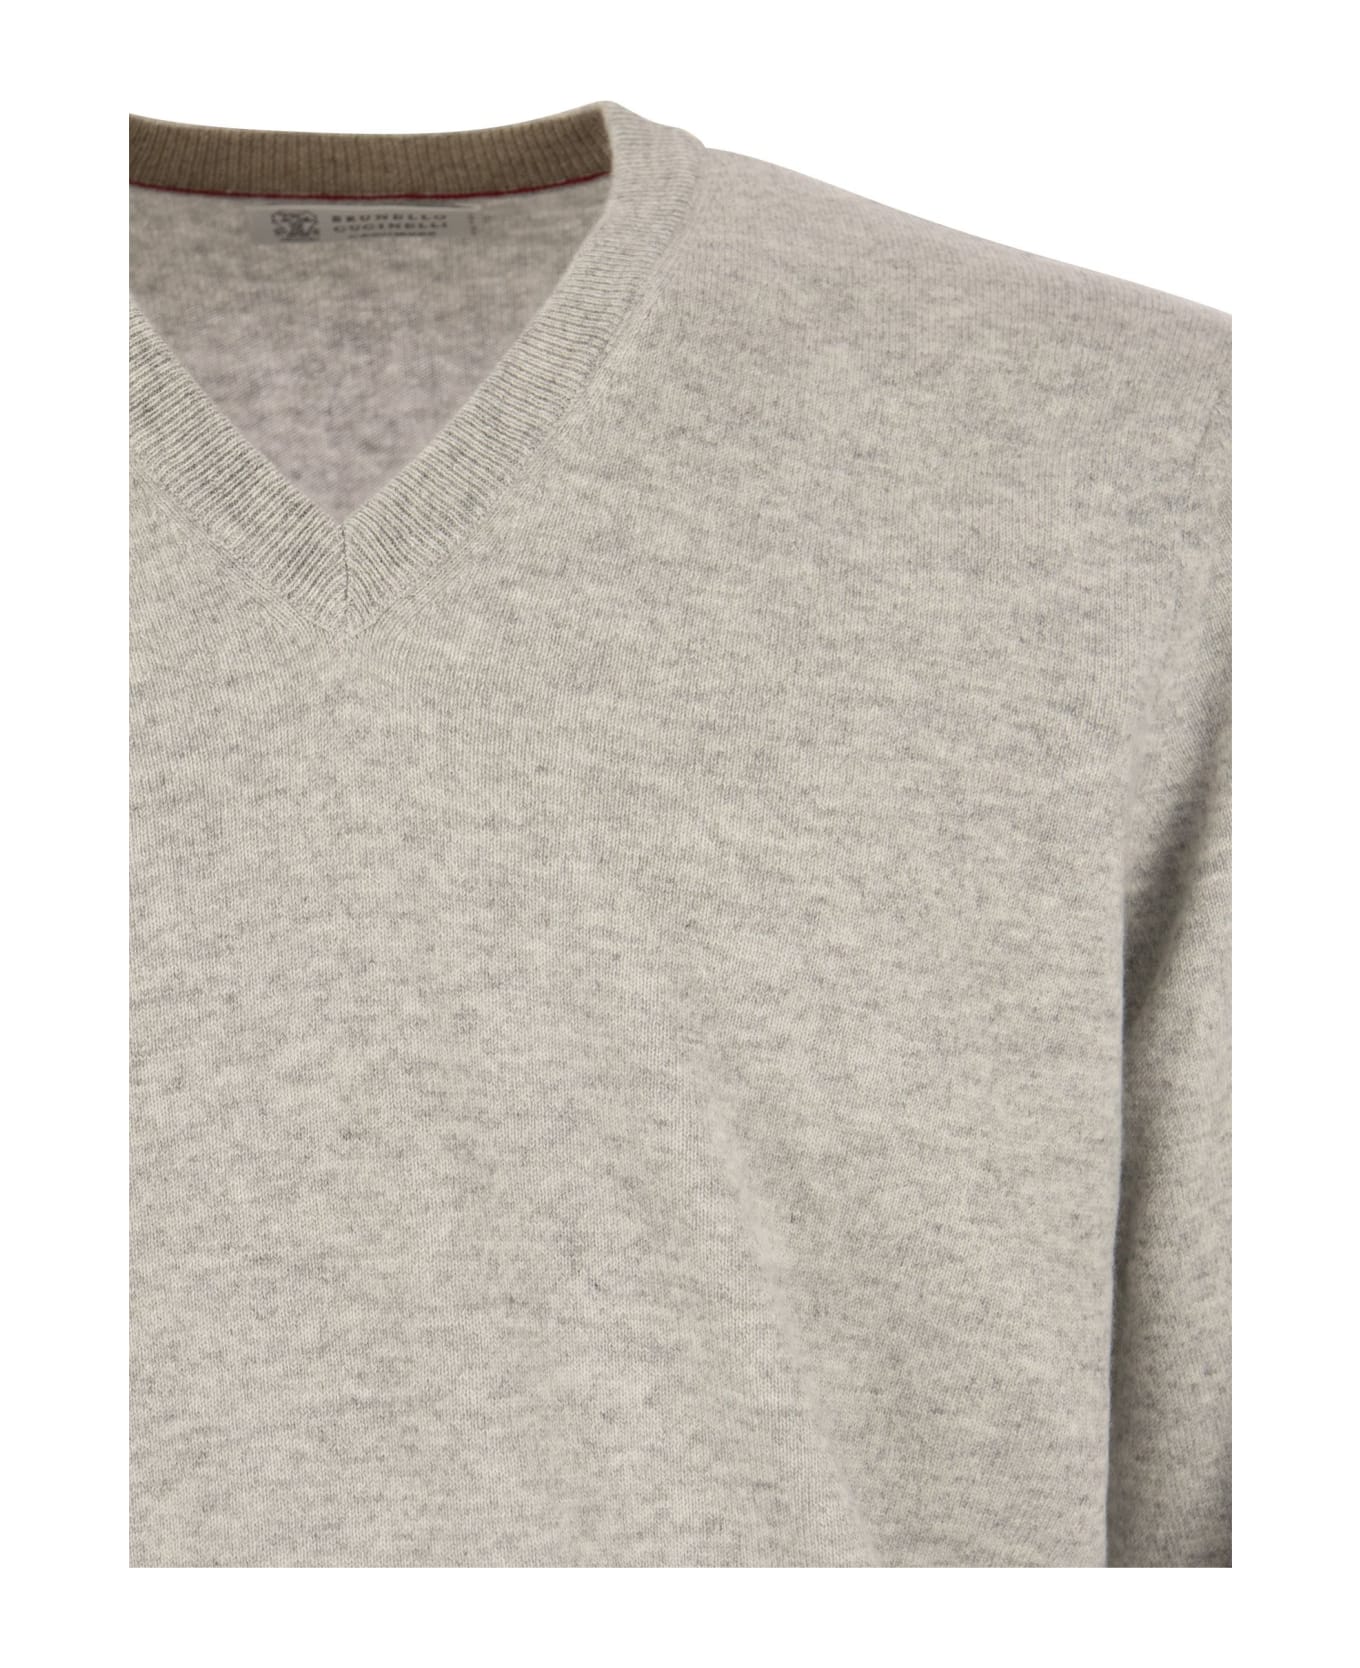 Brunello Cucinelli Cashmere V-neck Sweater - Grey